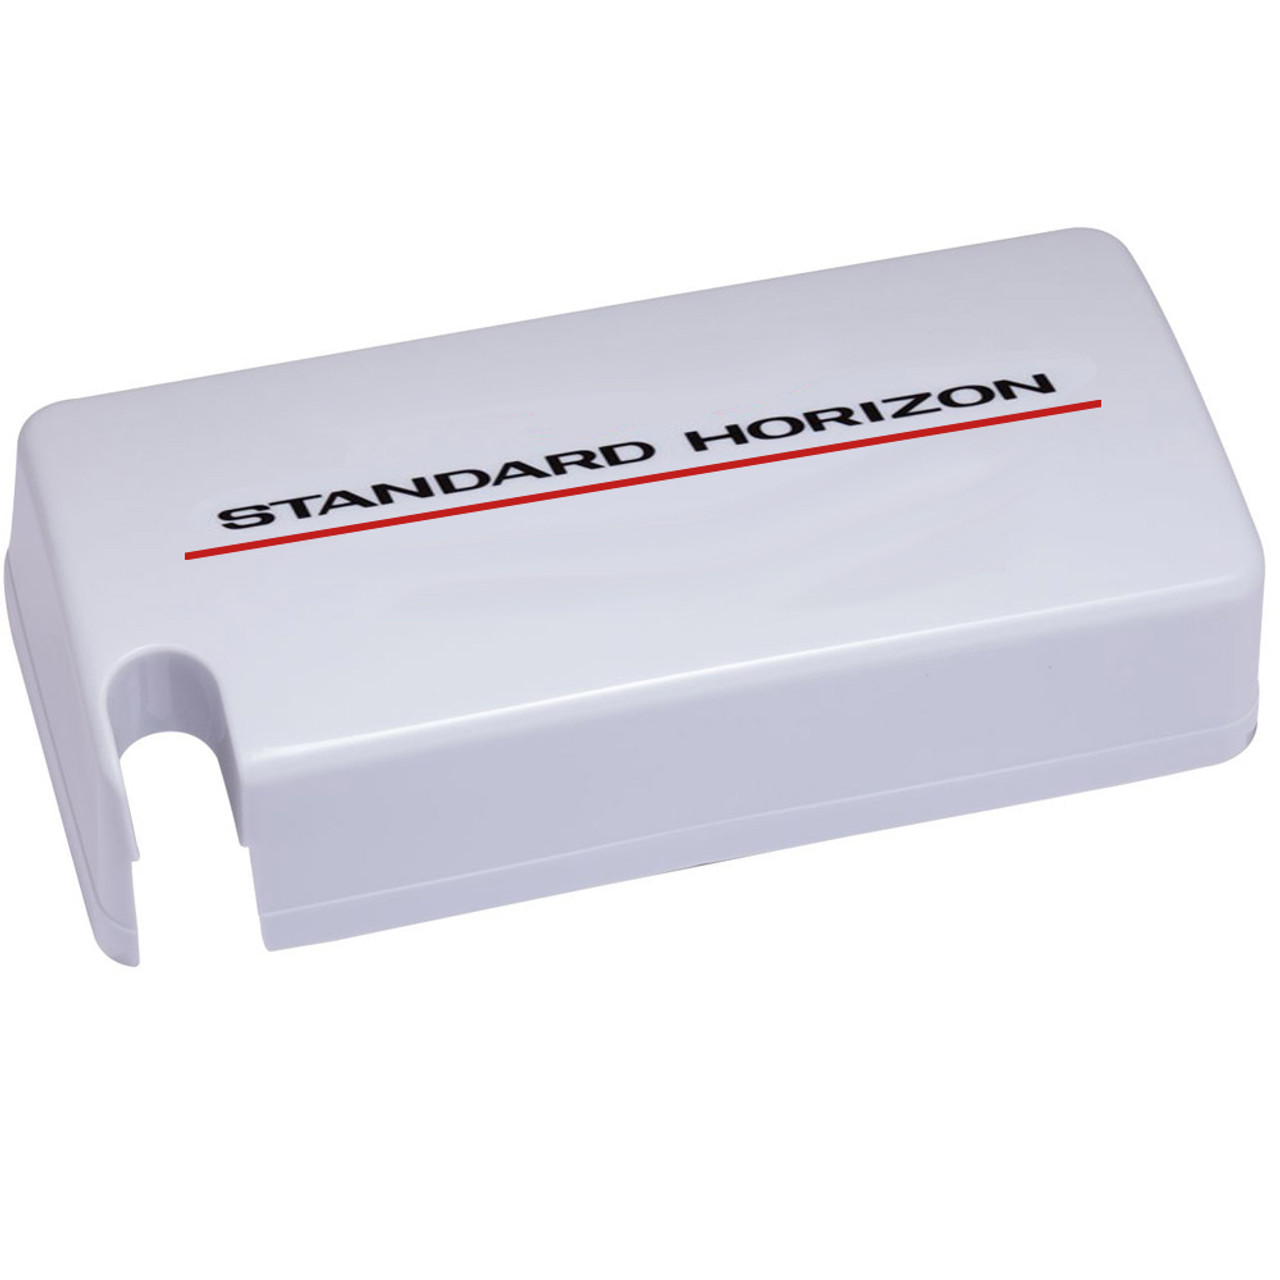 Standard Horizon Dust Cover f\/GX1600, GX1700, GX1800  GX1800G - White [HC1600]